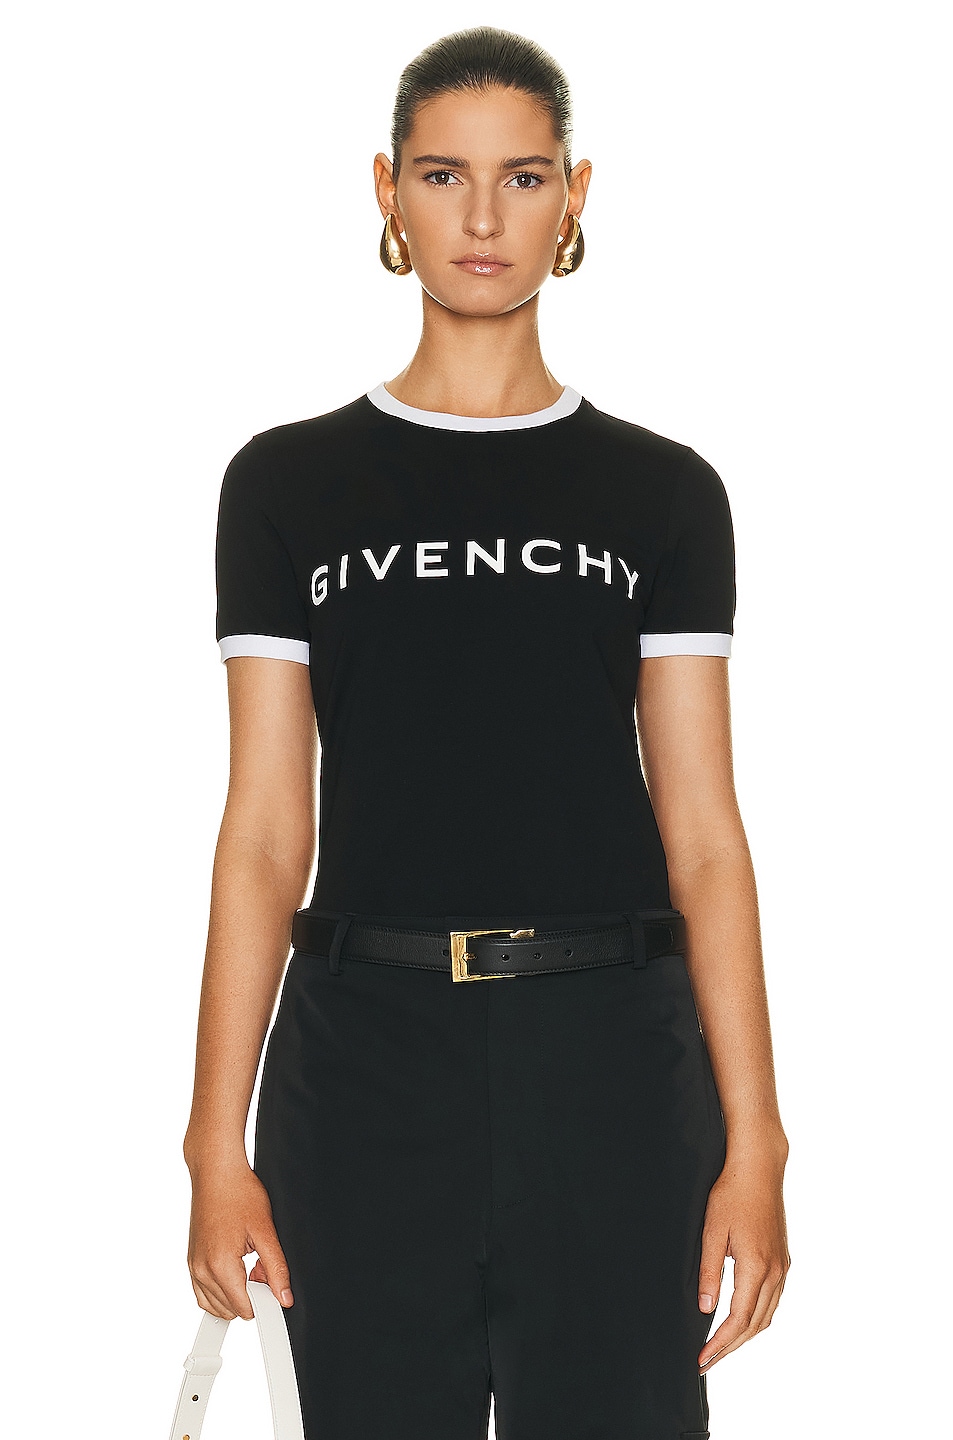 Givenchy Ringer T-shirt in Black & White | FWRD